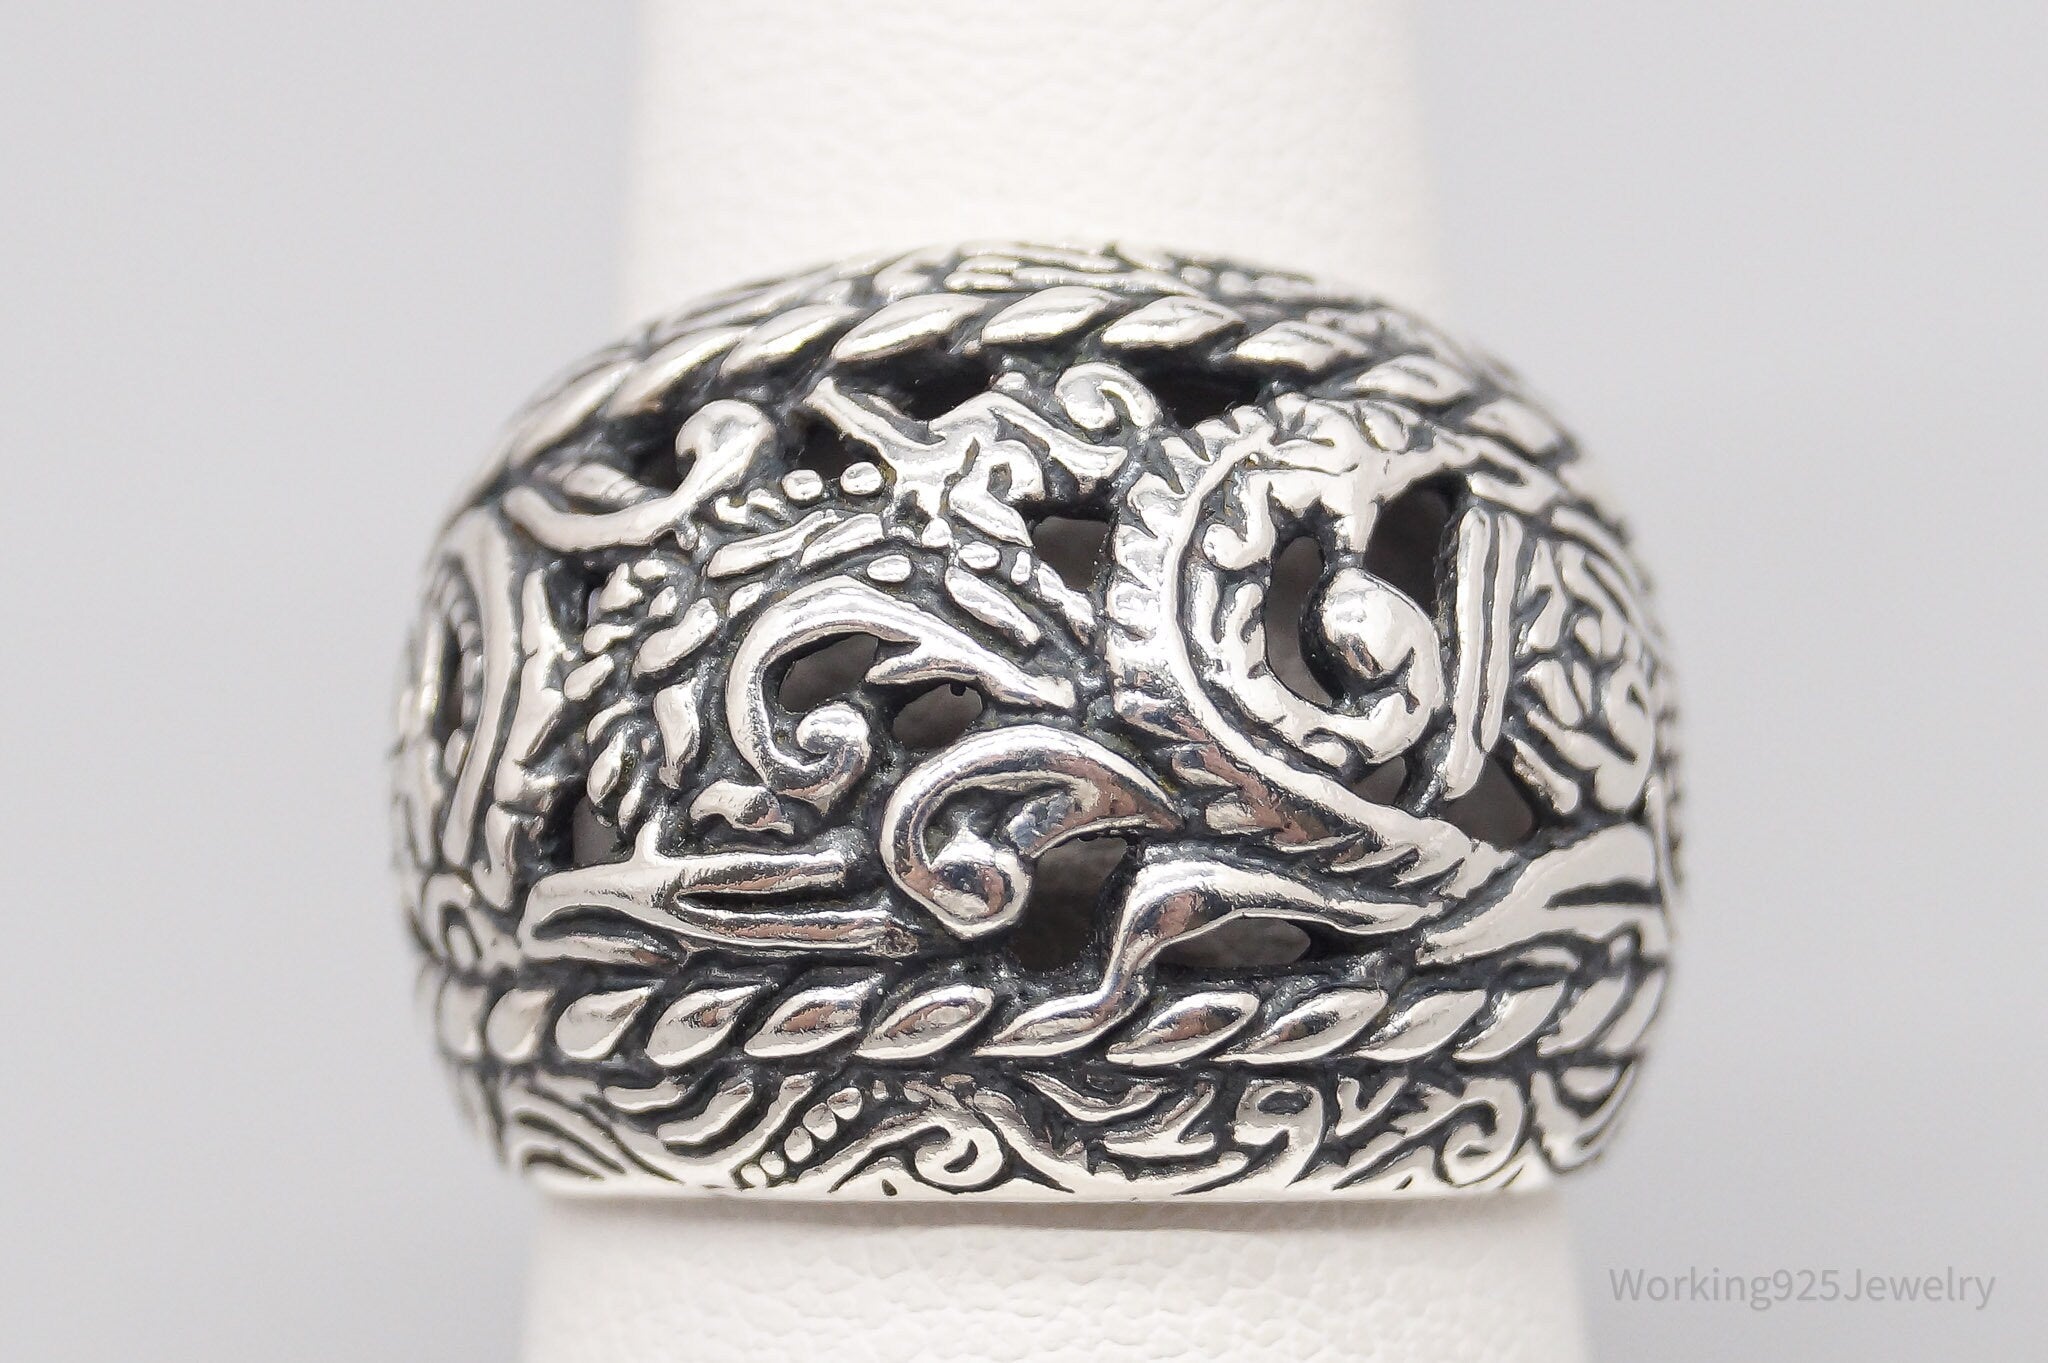 Vintage Native Designer Carolyn Pollack Relios Sterling Silver Ring - Size 7.25